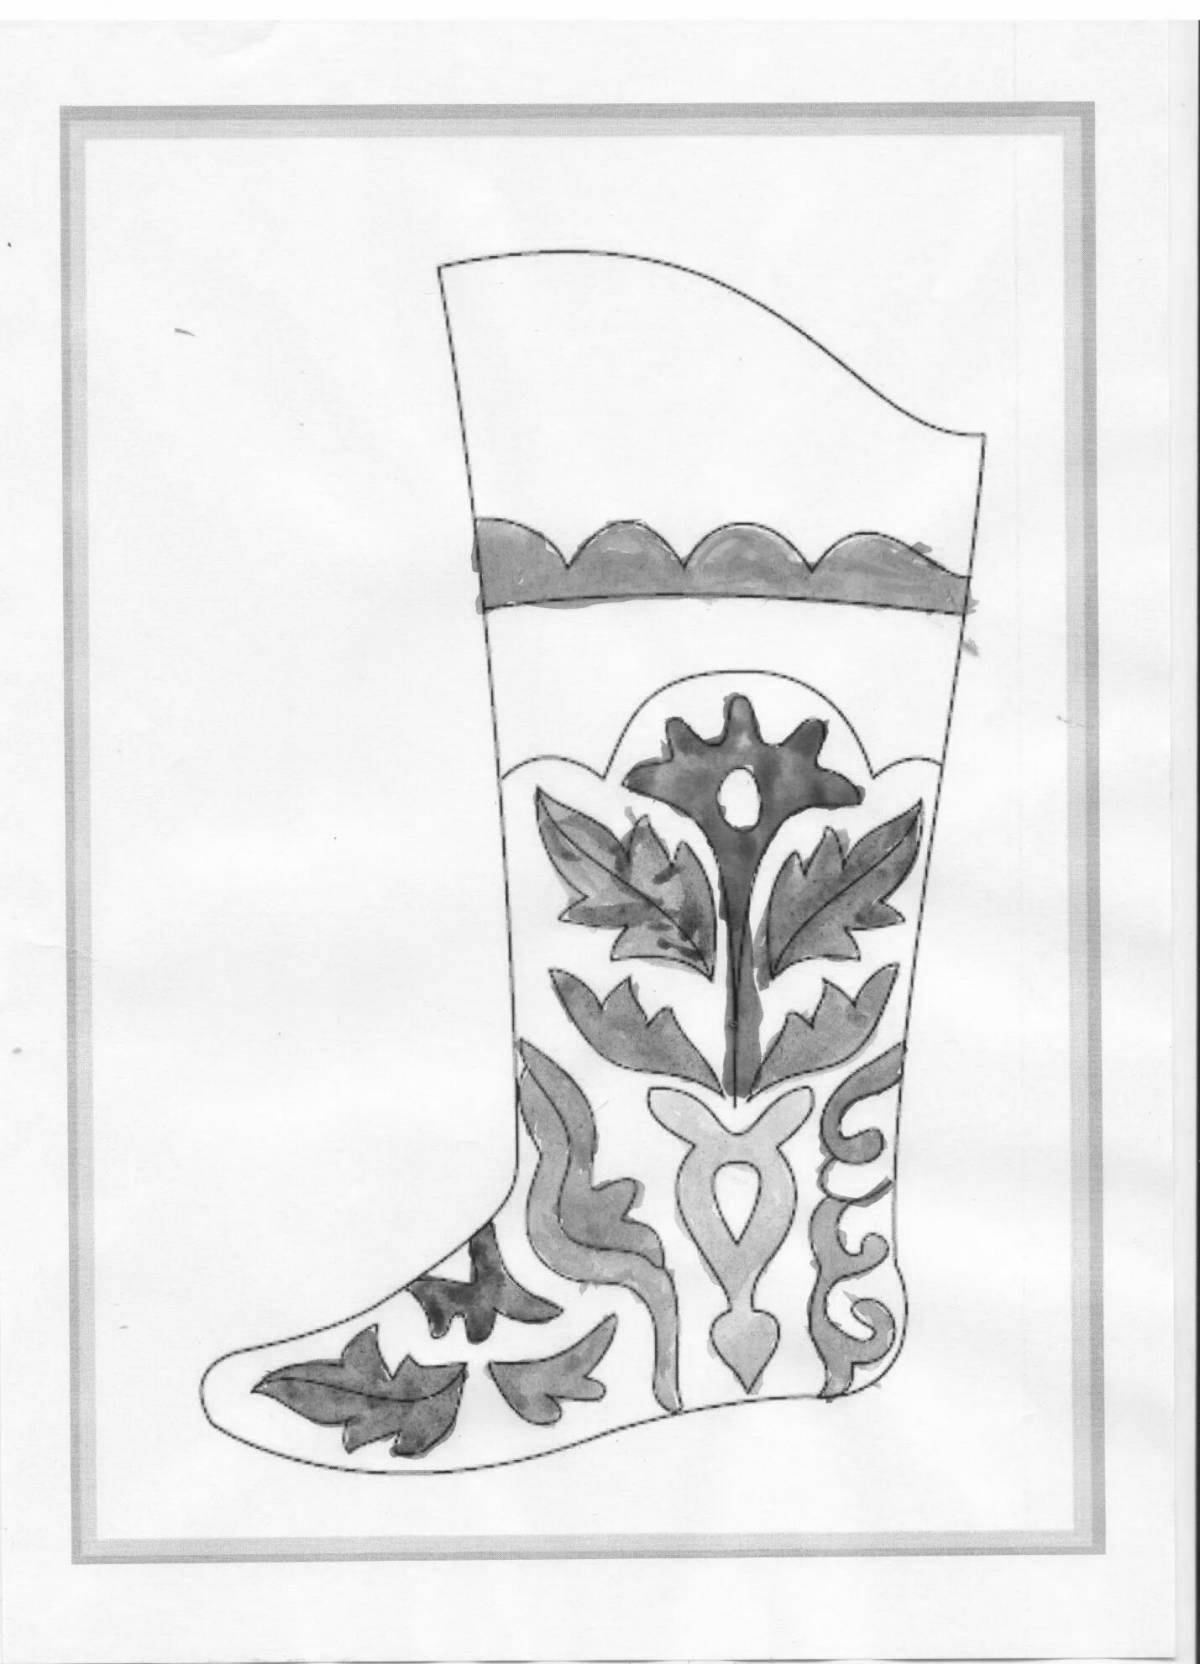 Coloring bright Tatar boots